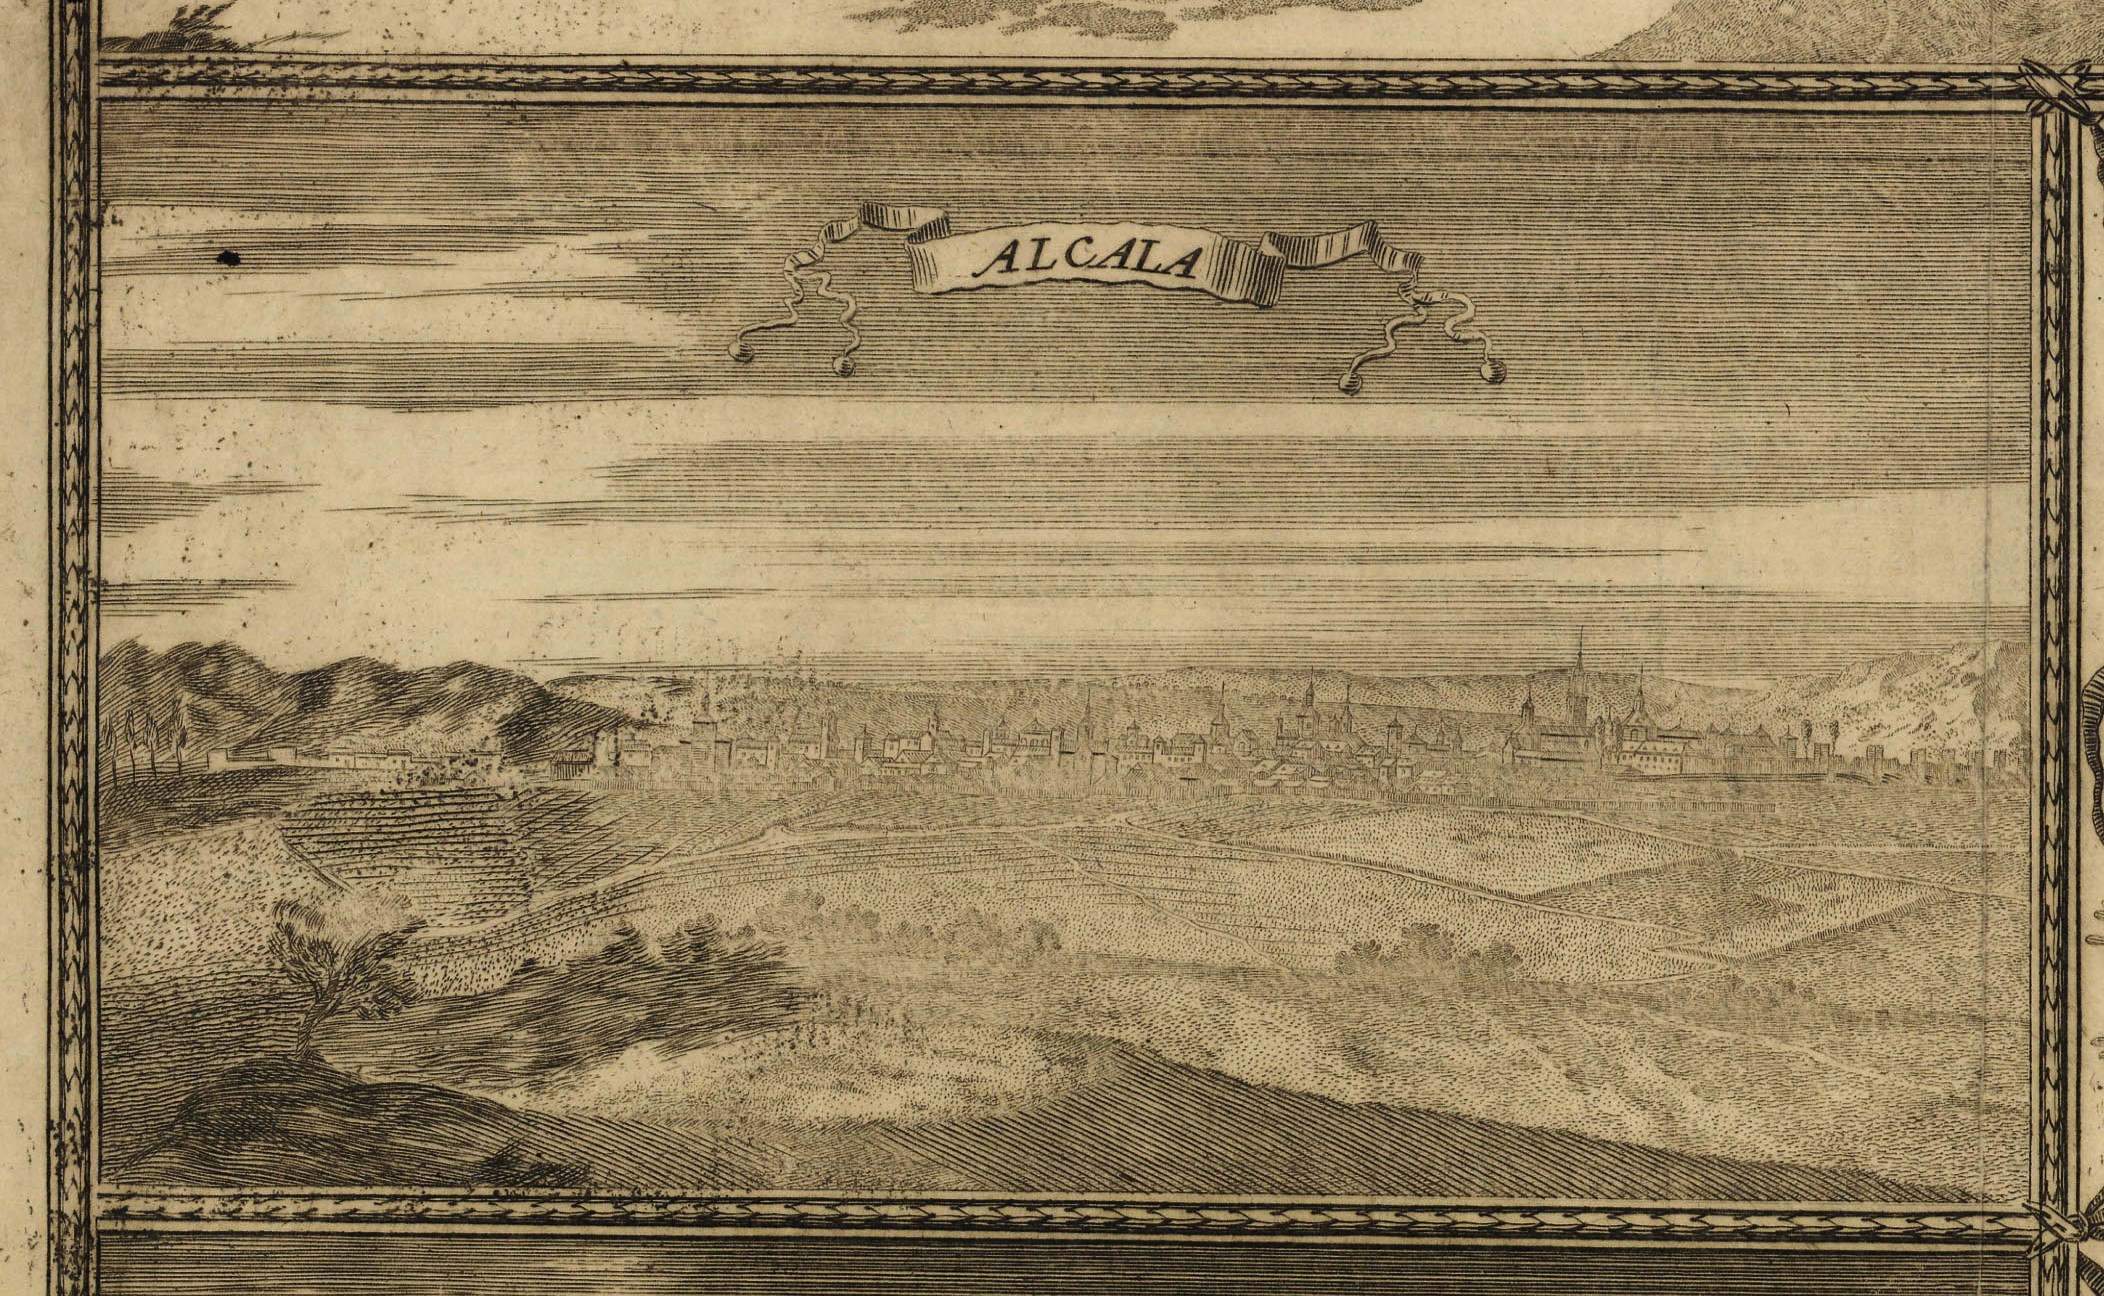 Mapa del arzobispado de Toledo en 1681